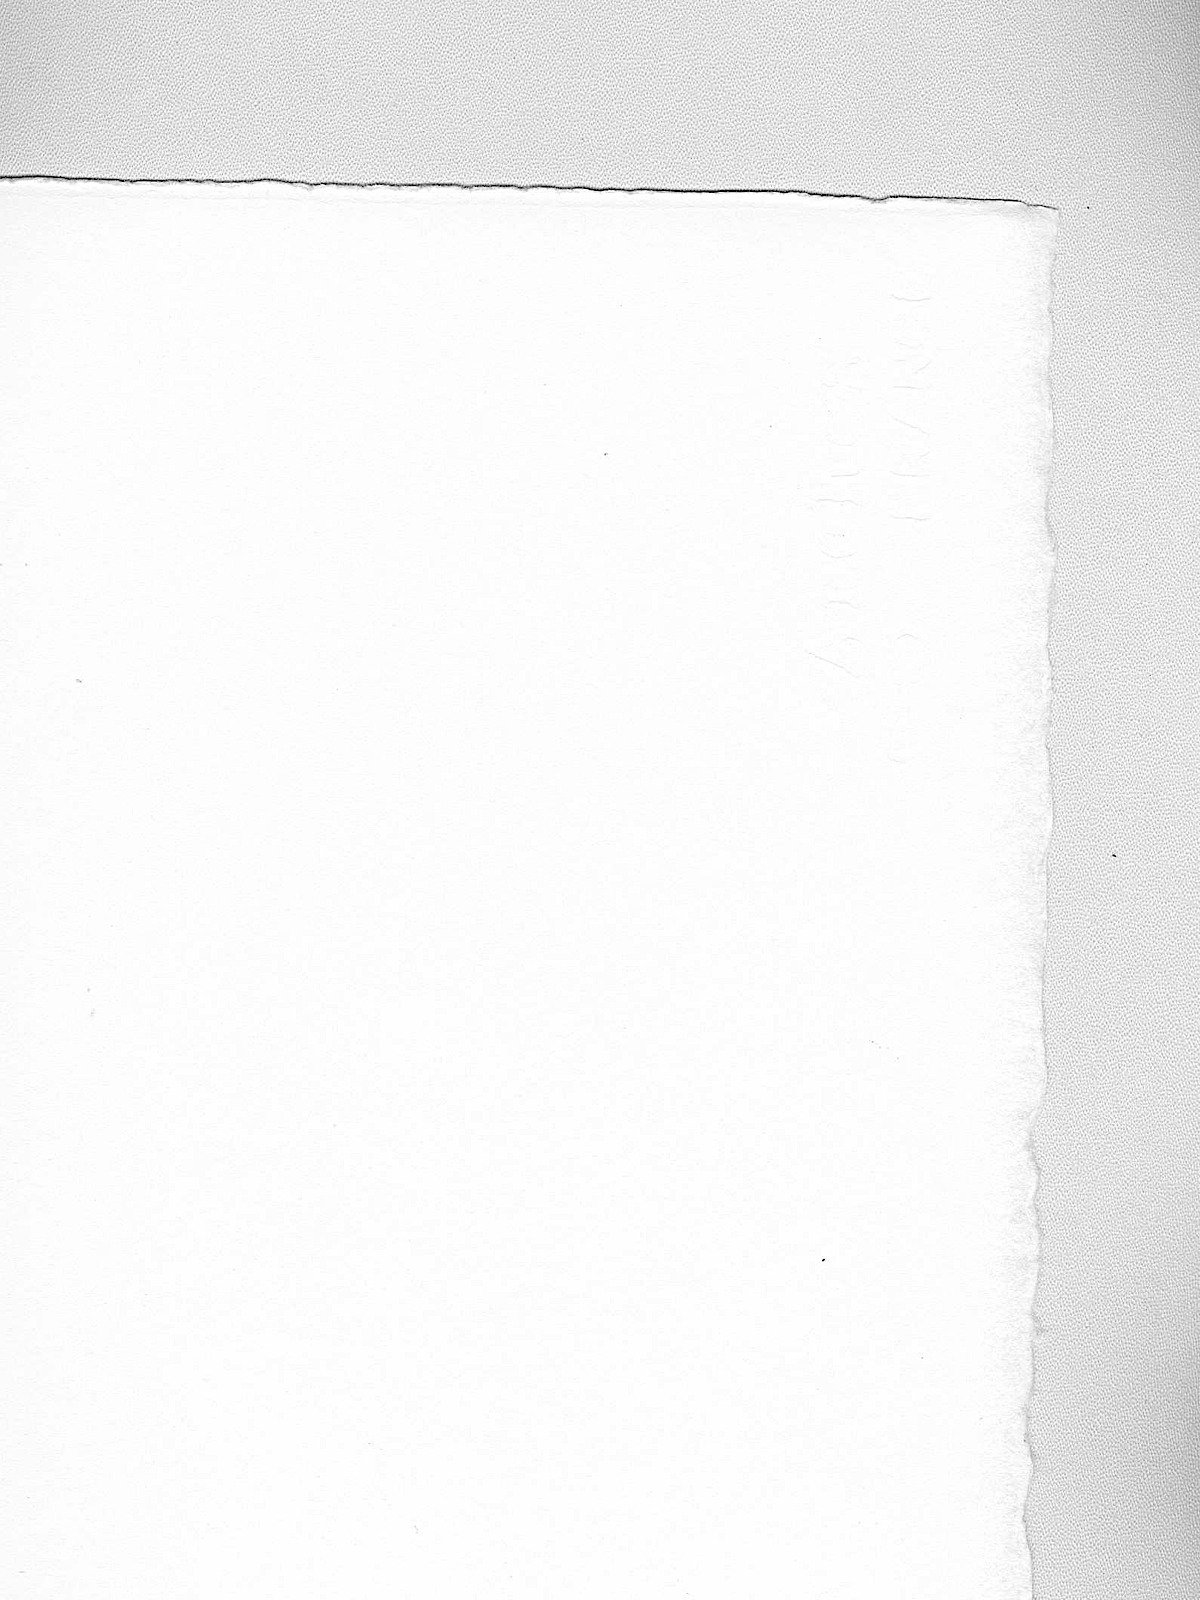 Arches Watercolor Papers - 22'' x 30'', Bright White, Cold Press